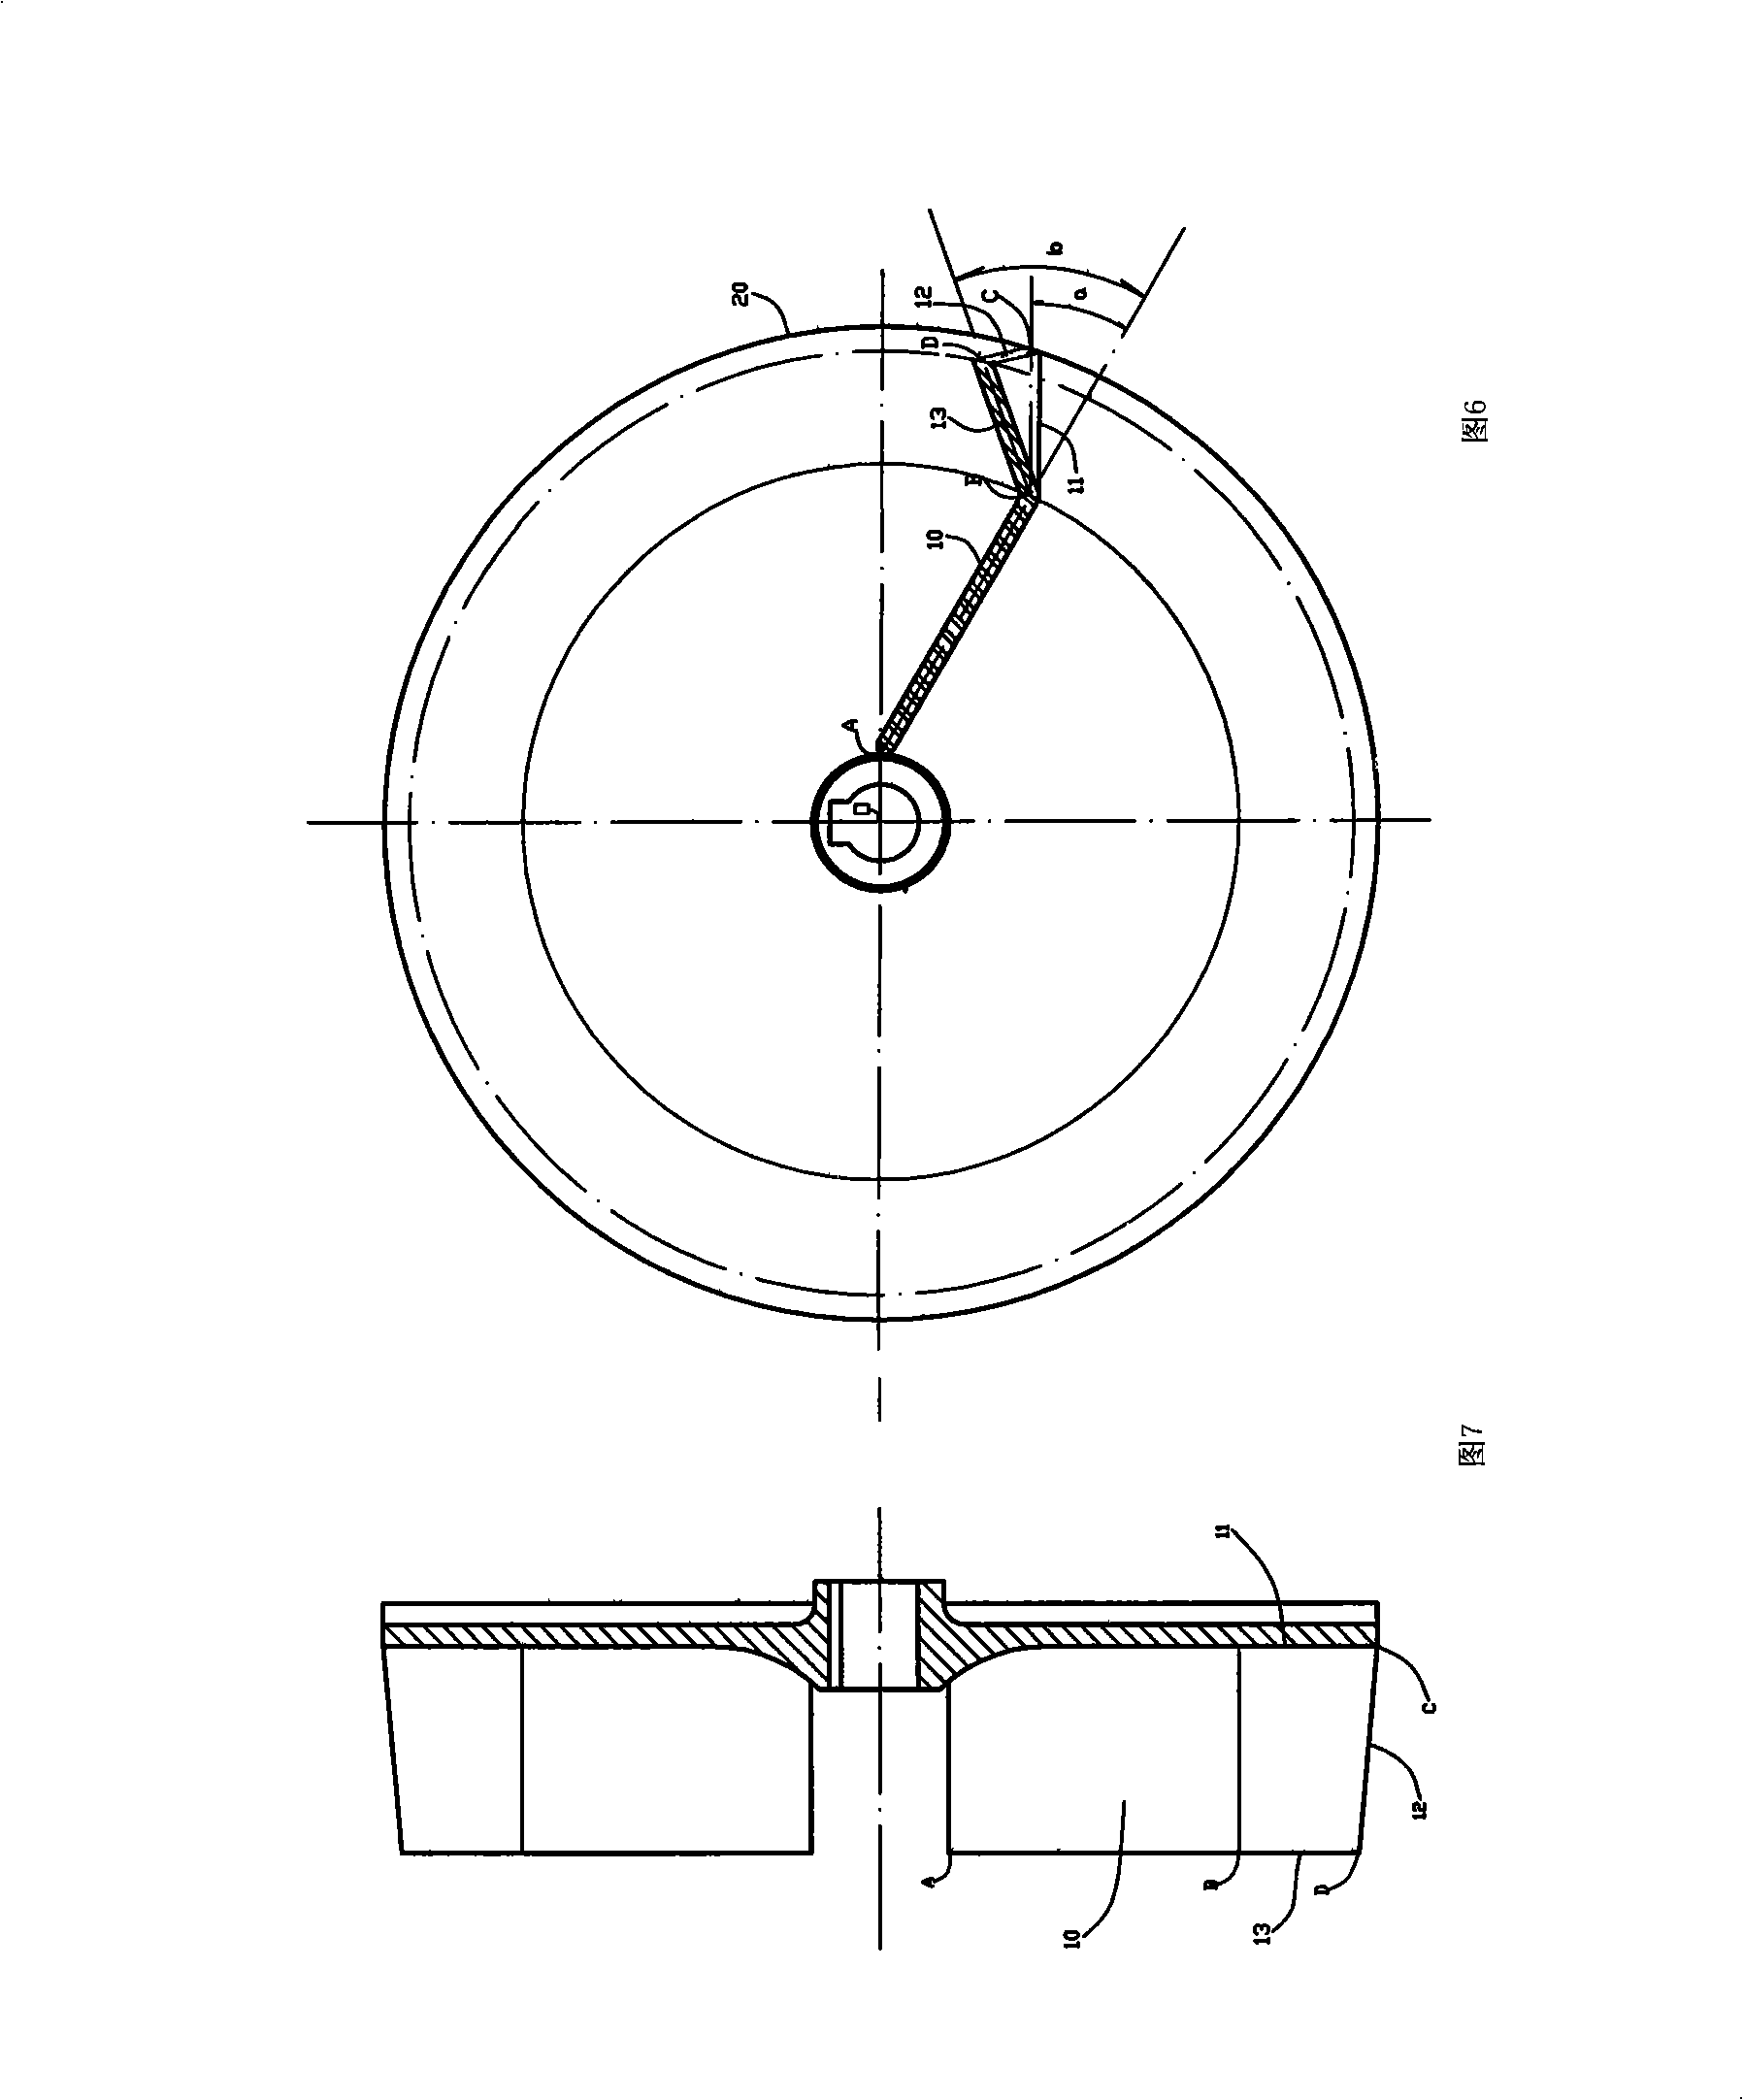 Spiral flow constant-pressure pump